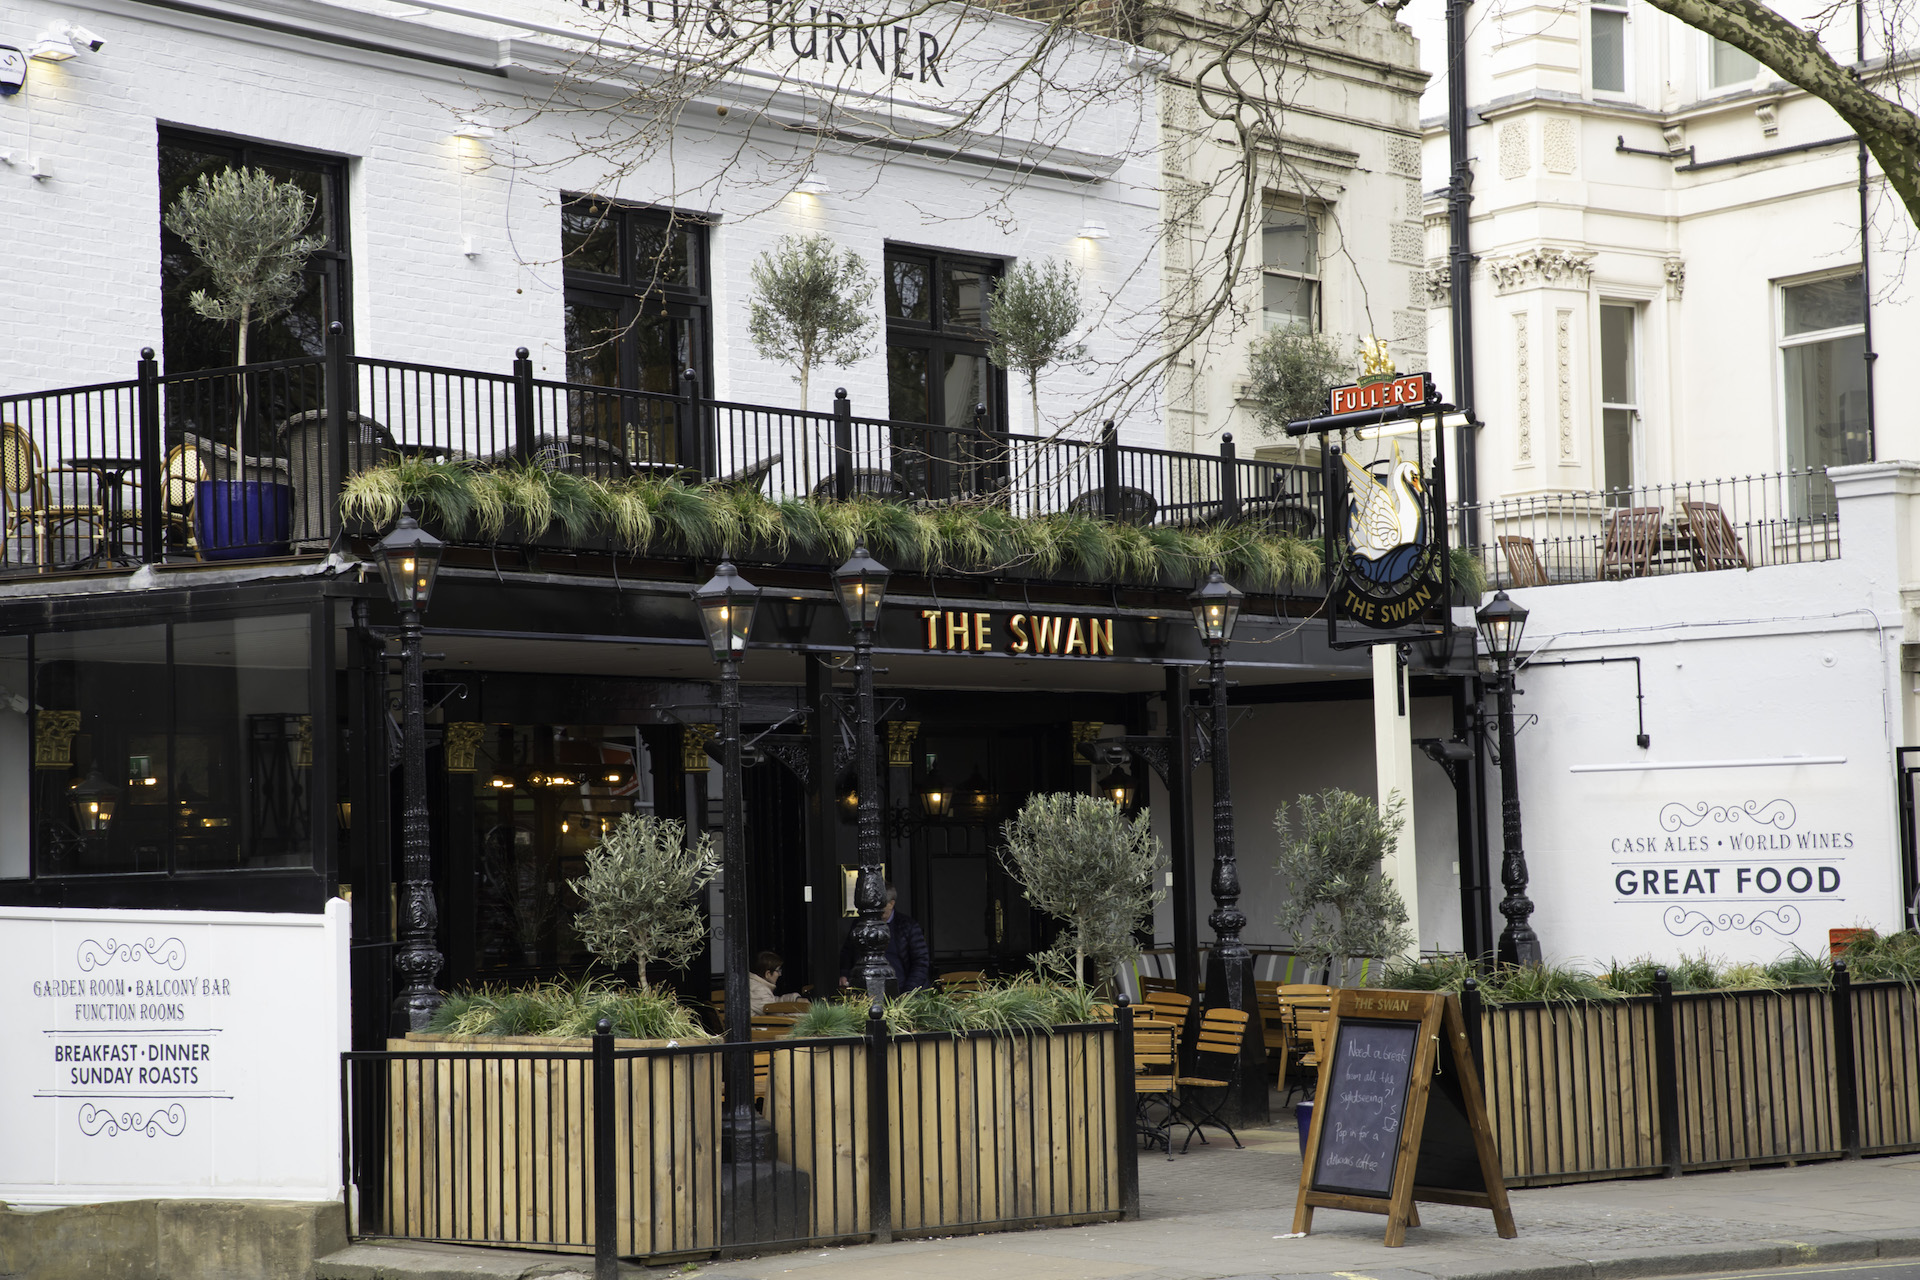 The Swan - Fuller's Pub and Restaurant near Hyde Park